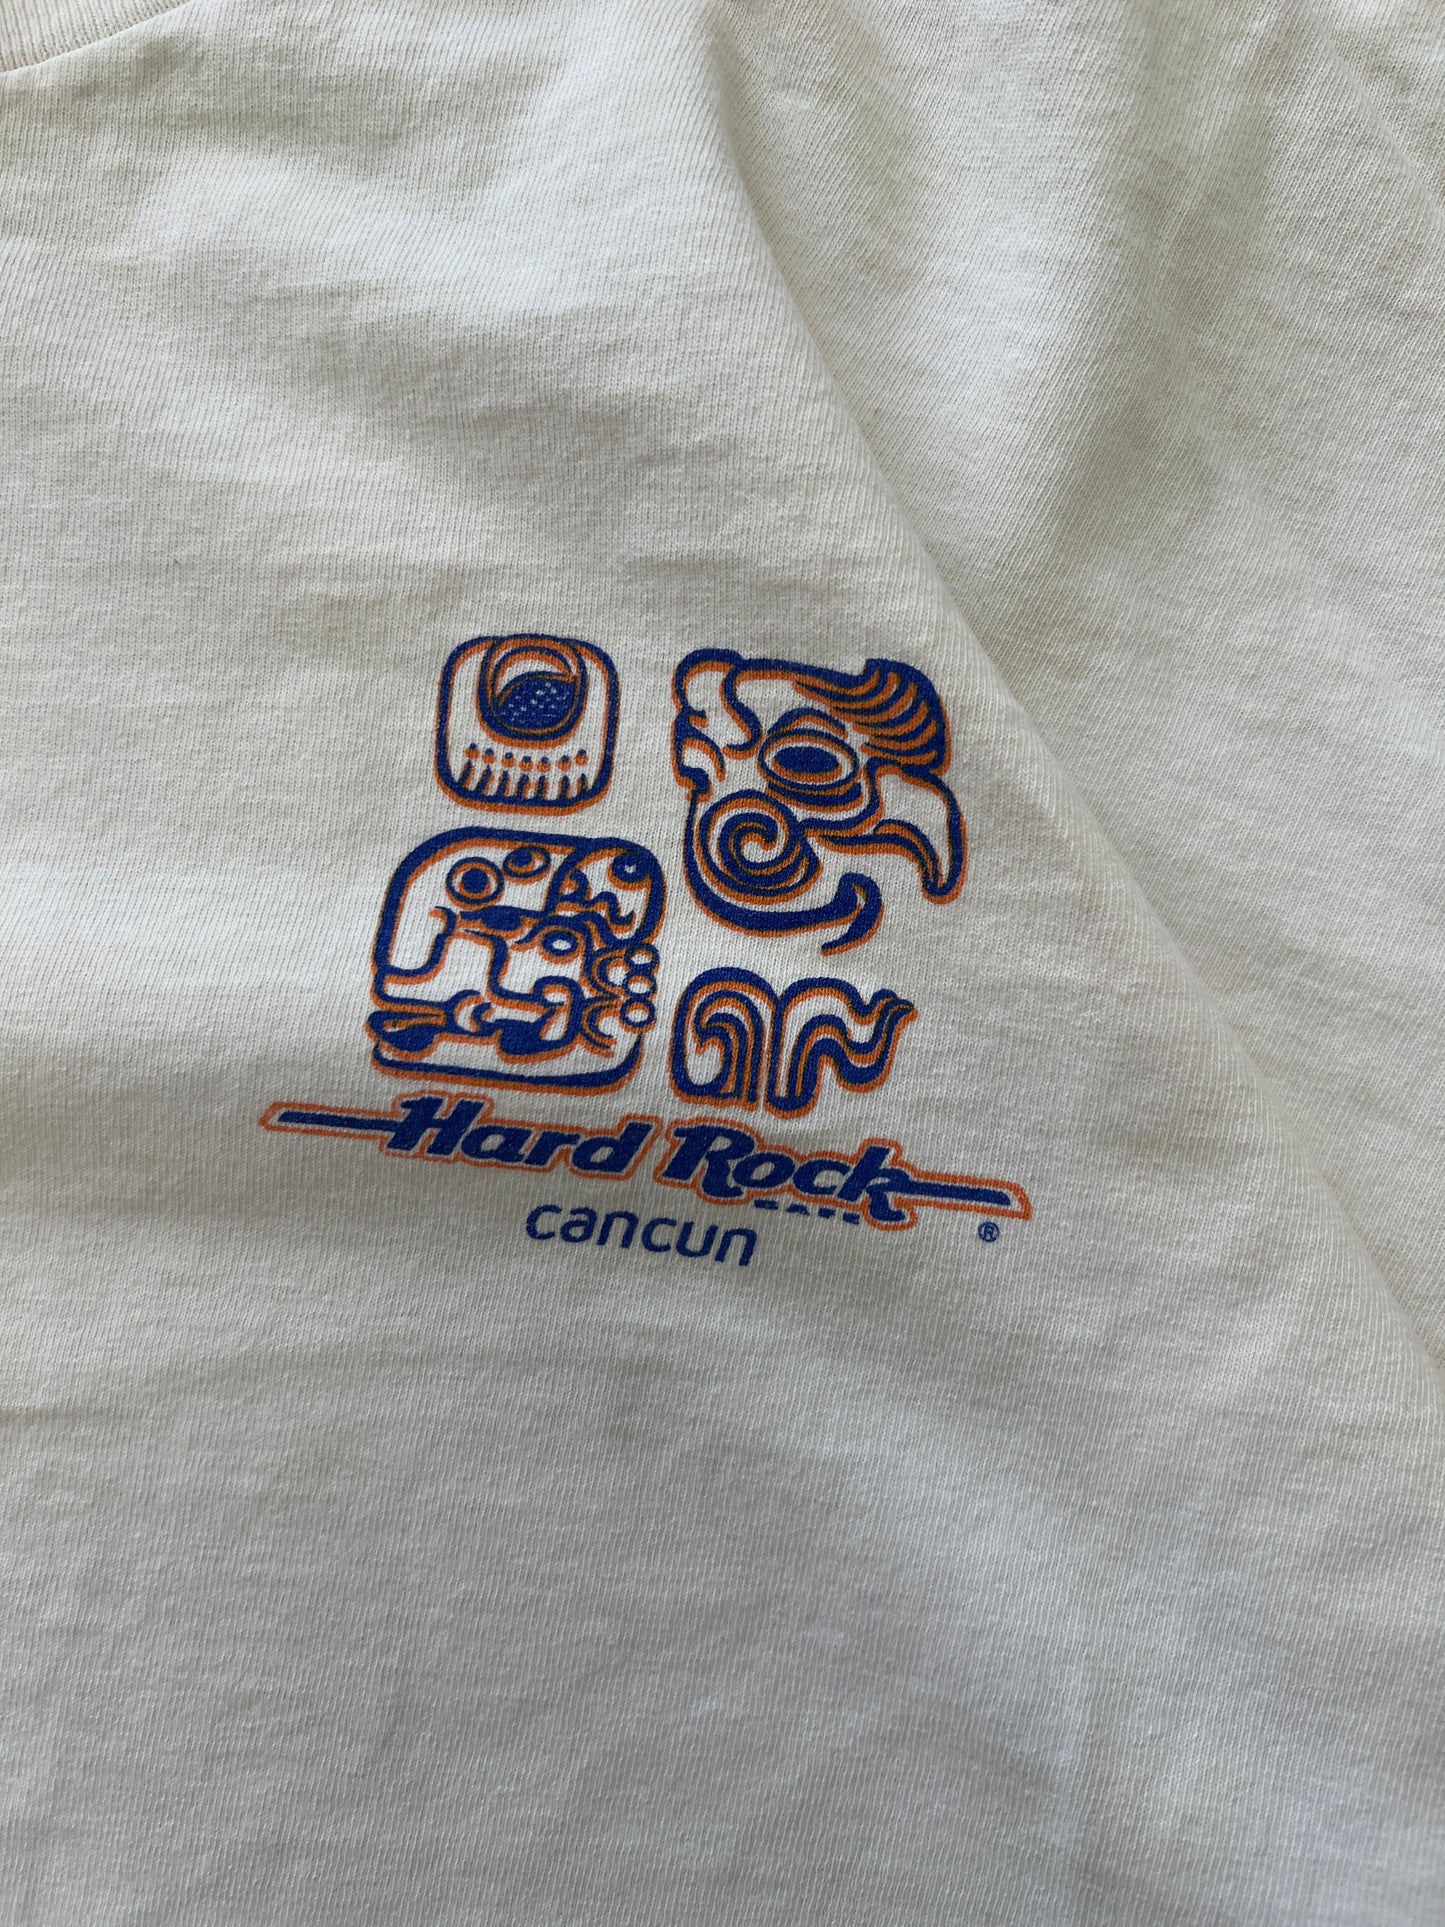 Vintage Hard Rock Shirt - XL